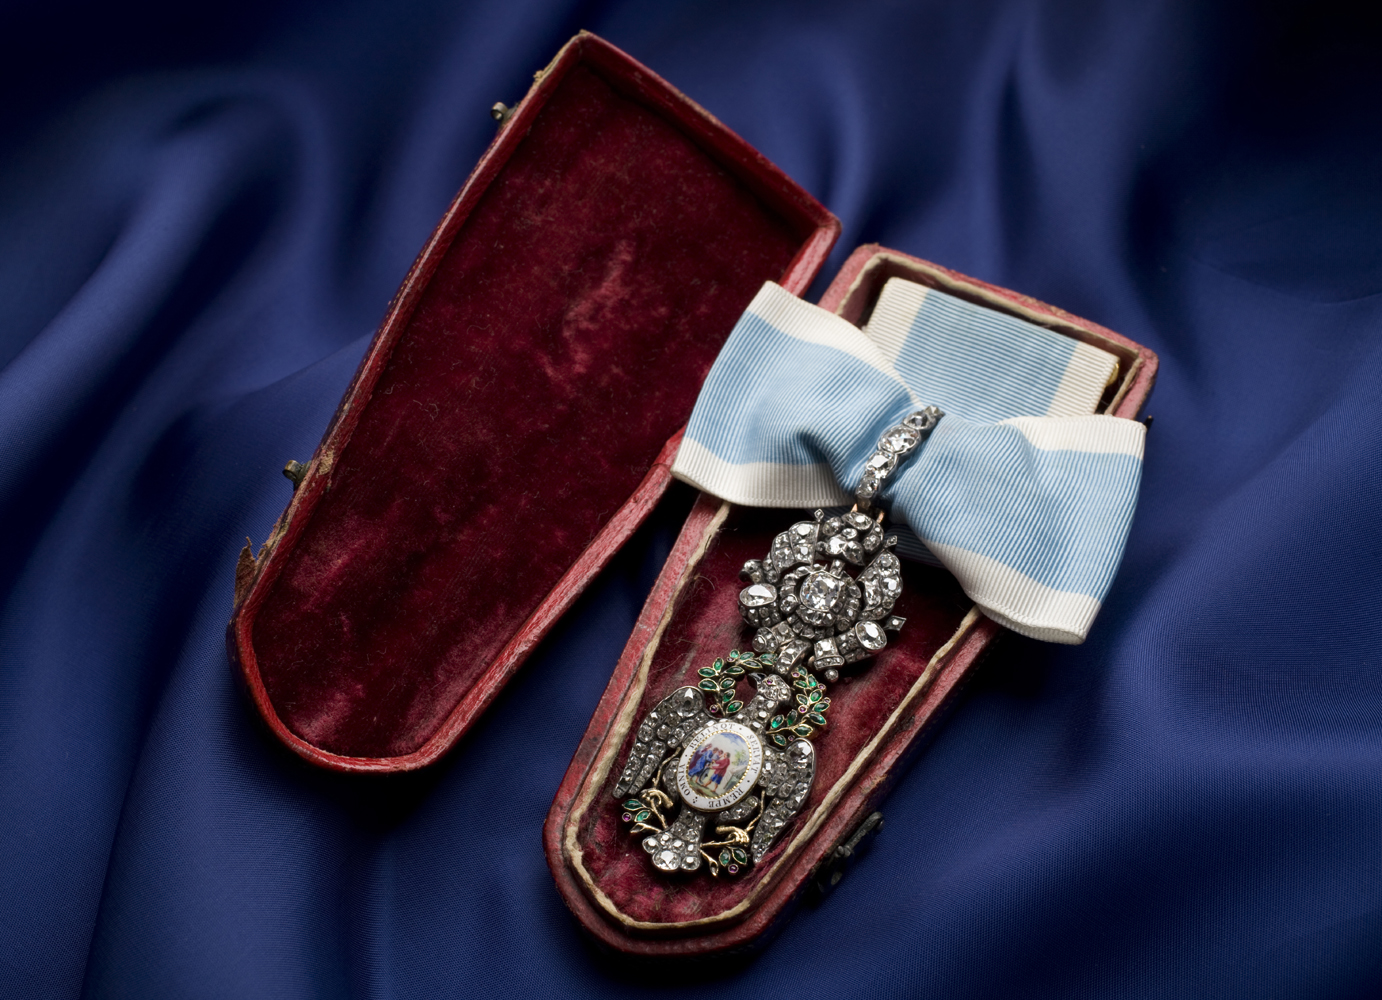 Bejeweled insignia resting inside a red velvet-lined case